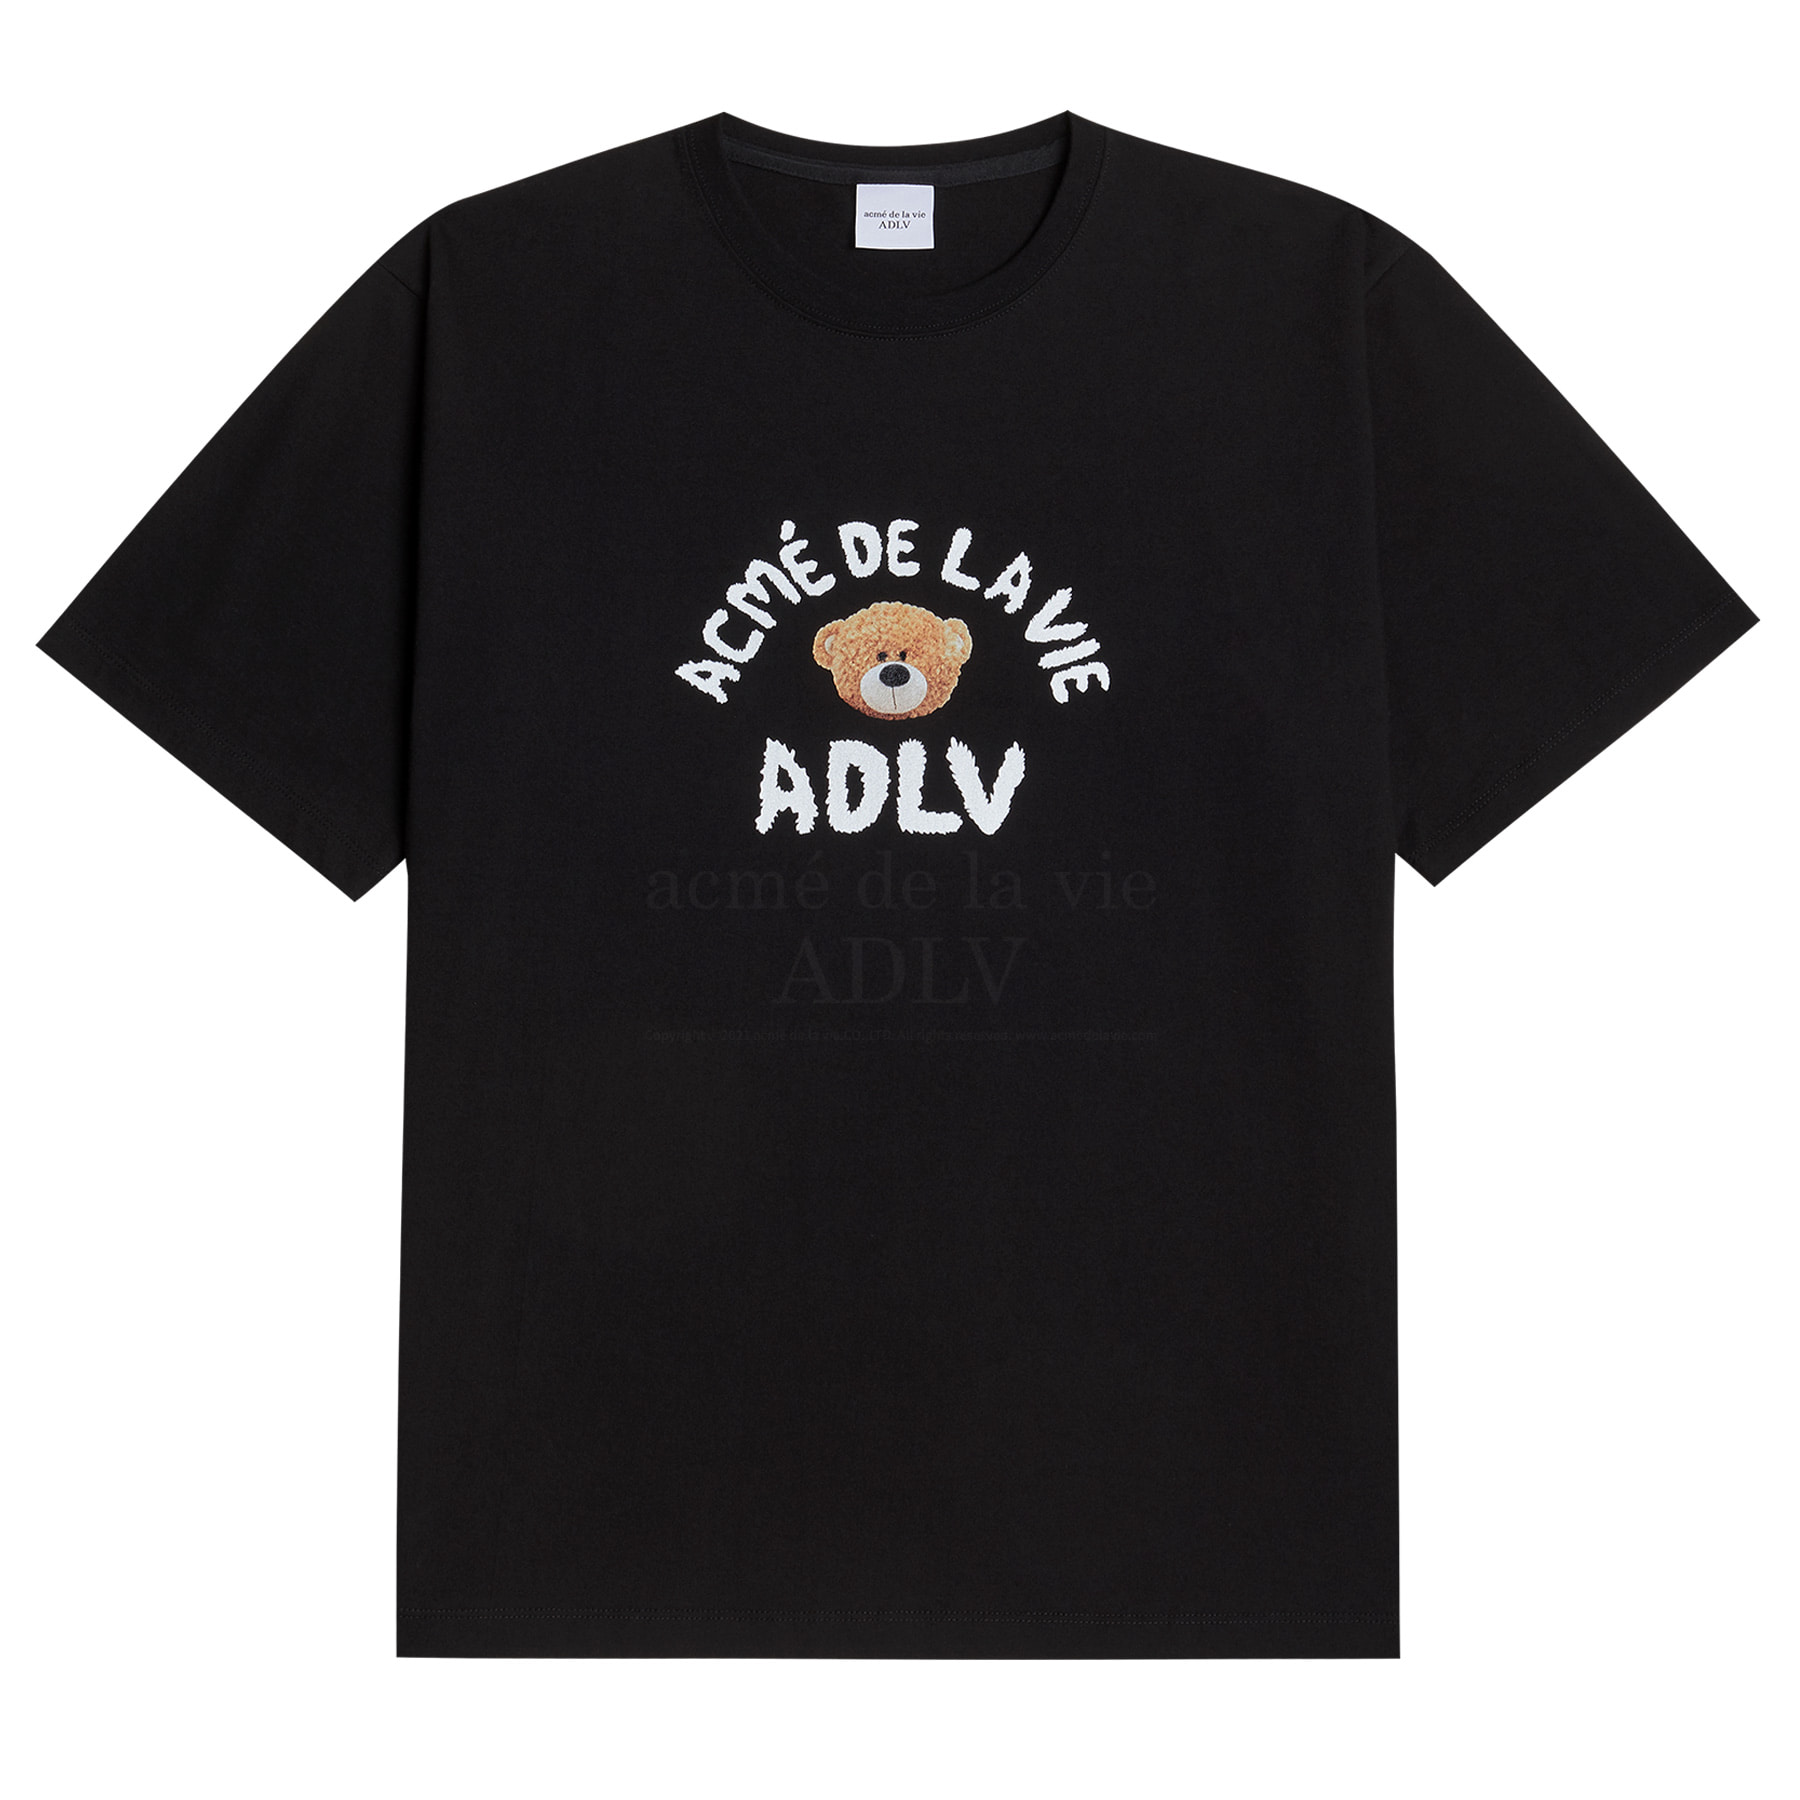 ADLV-[아크메드라비] TEDDY BEAR (BEAR DOLL) SHORT SLEEVE T-SHIRT BLACK